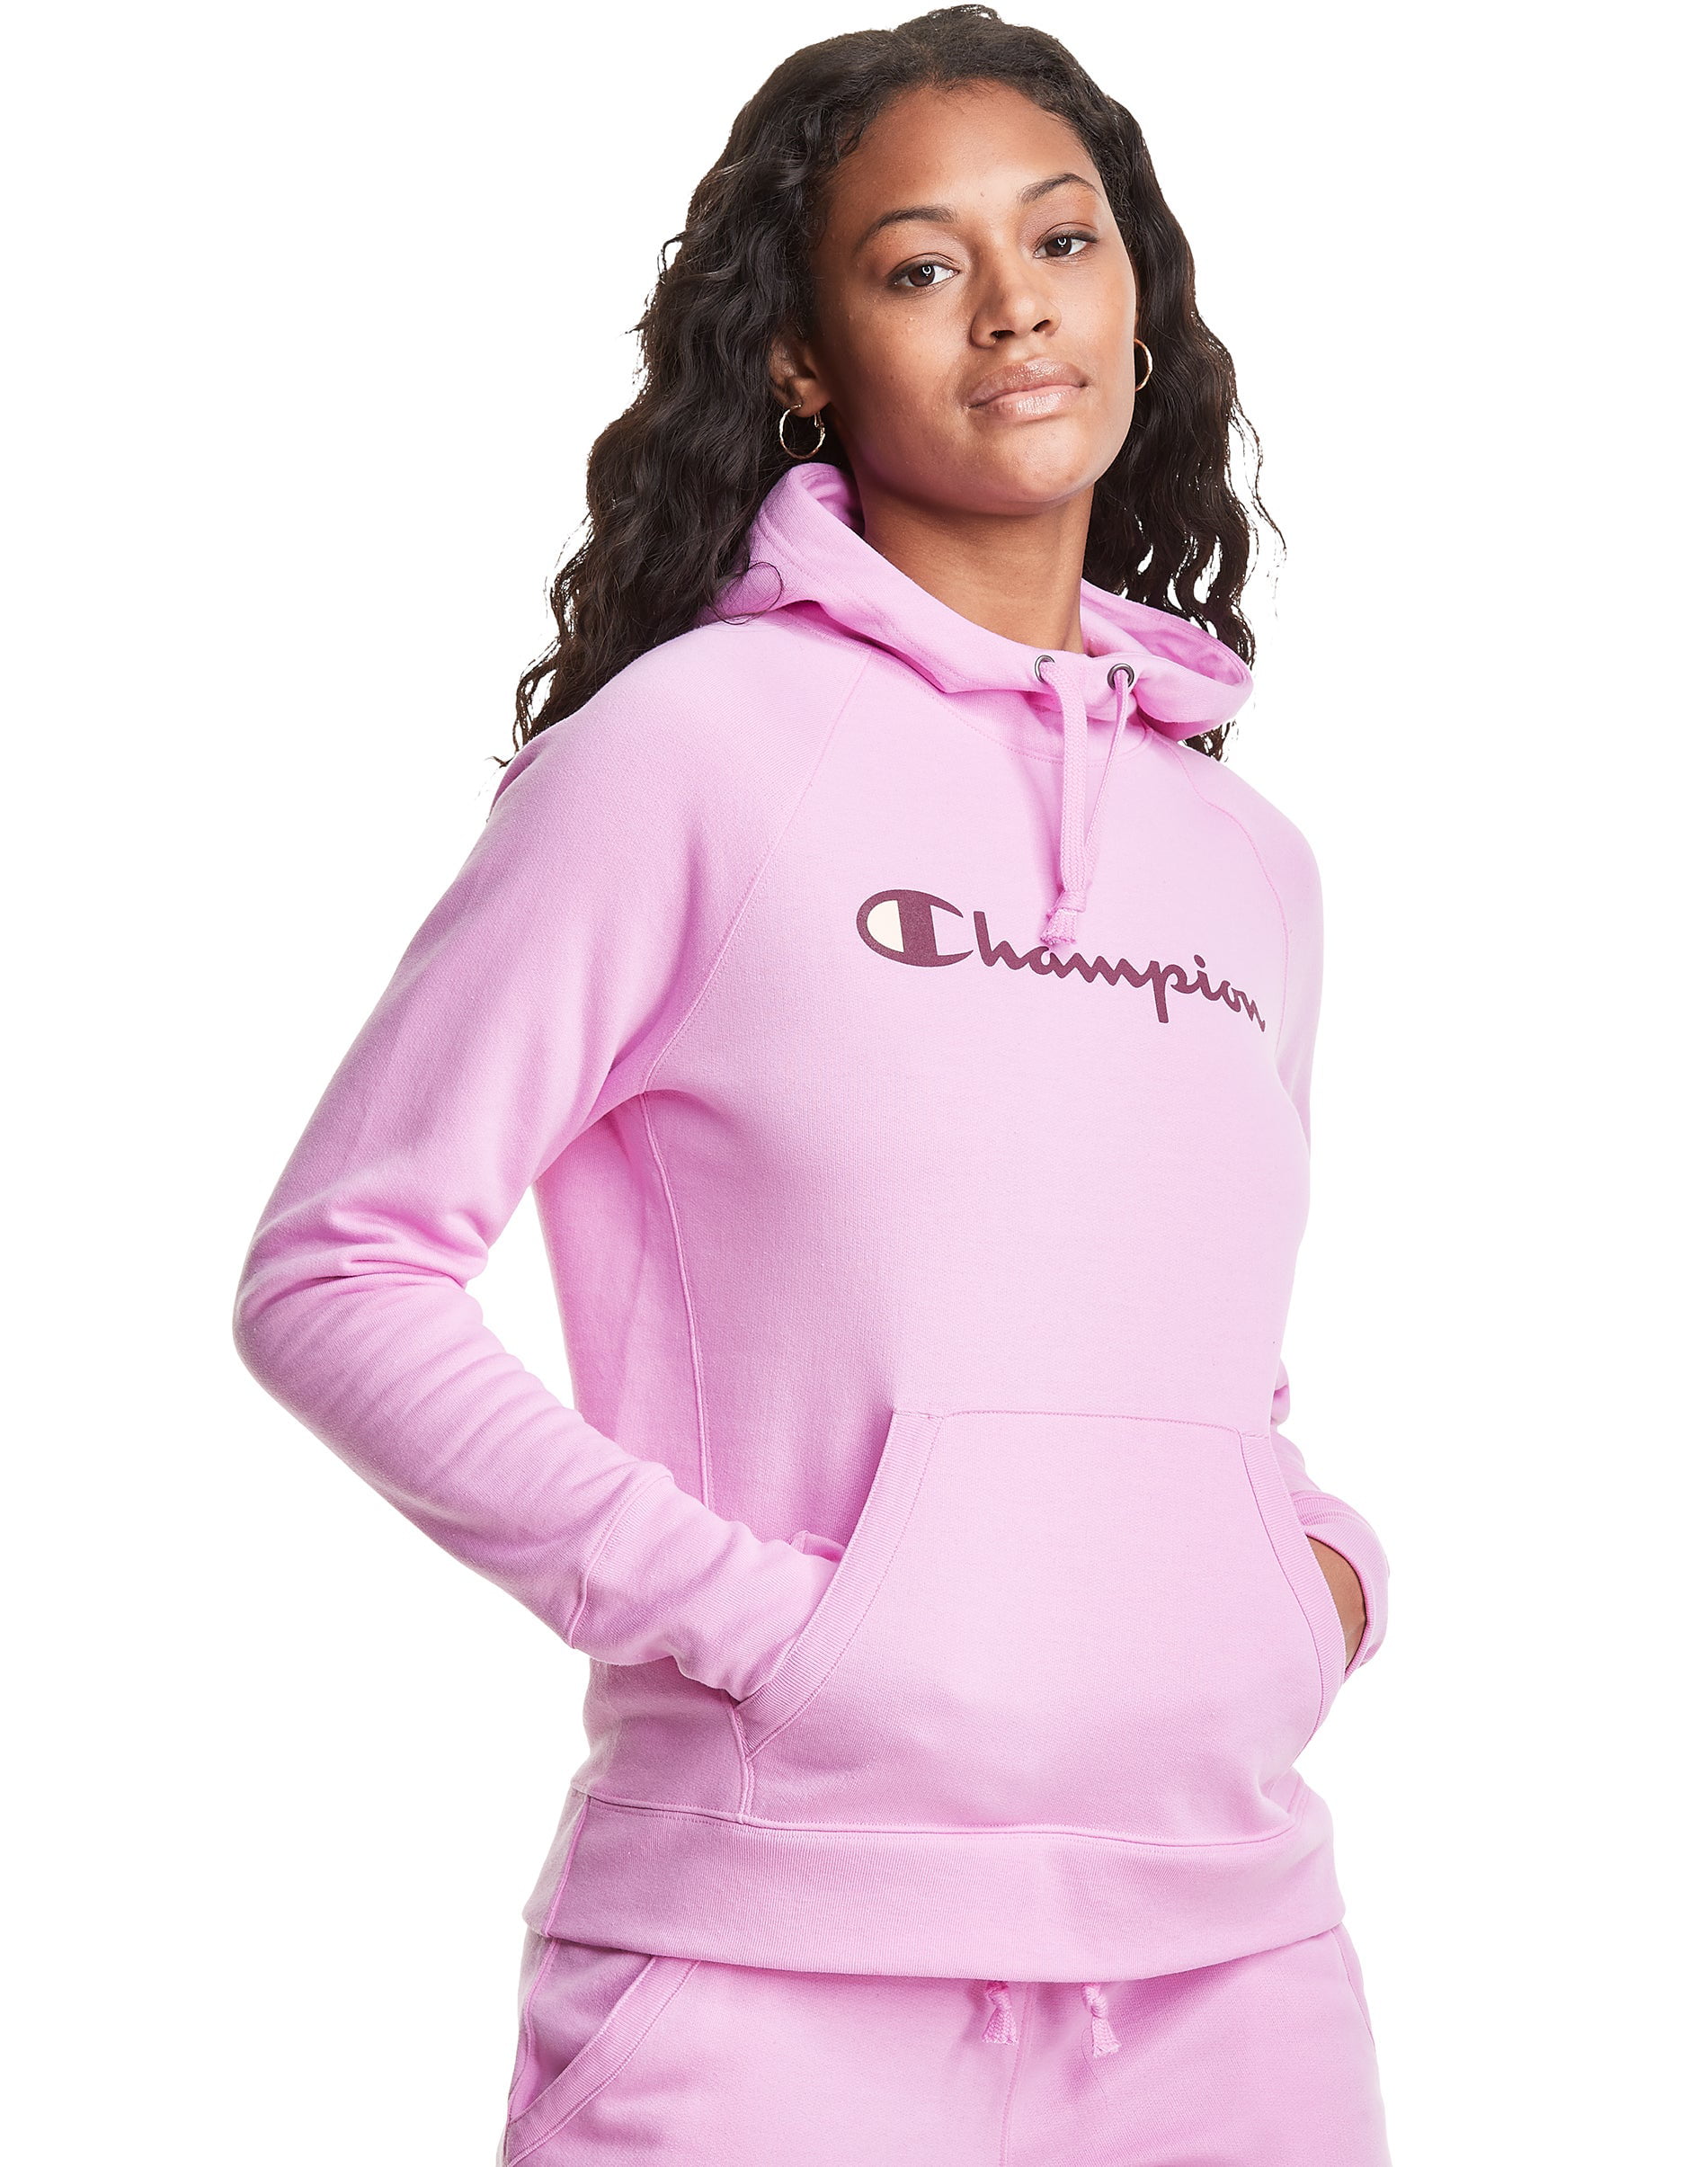 Champion Women Hooded Long Sleeve athletic hoodies - Walmart.com